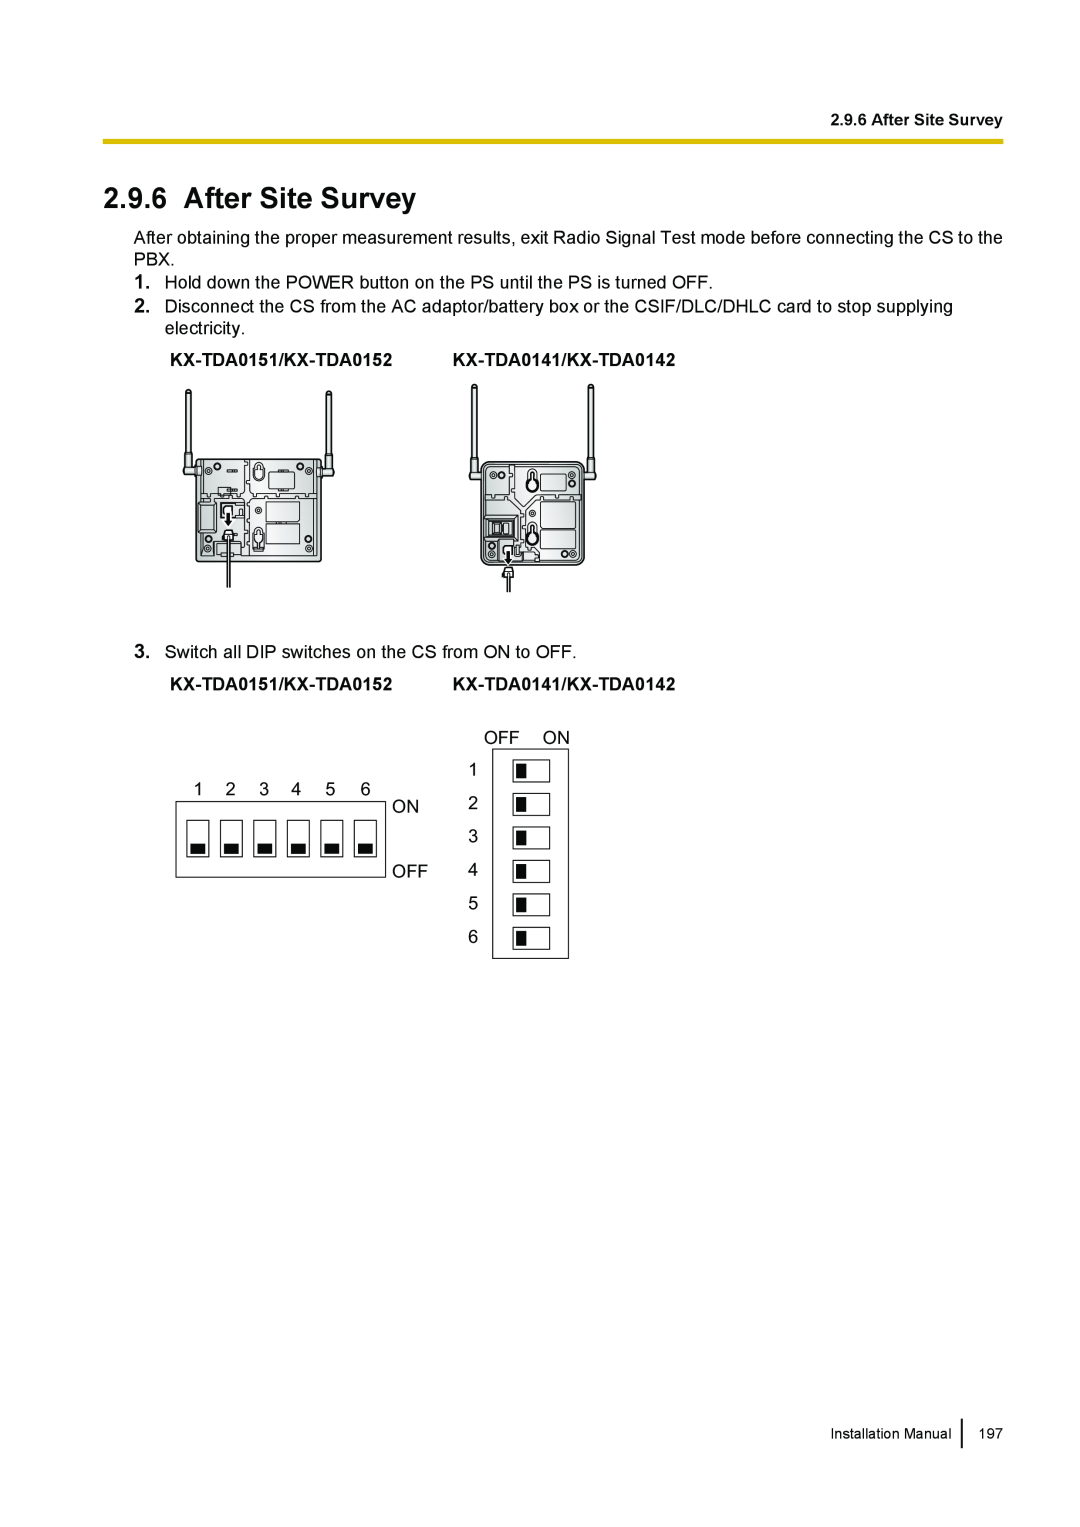 Panasonic KX-TDA100 installation manual After Site Survey, KX-TDA0151/KX-TDA0152 KX-TDA0141/KX-TDA0142 